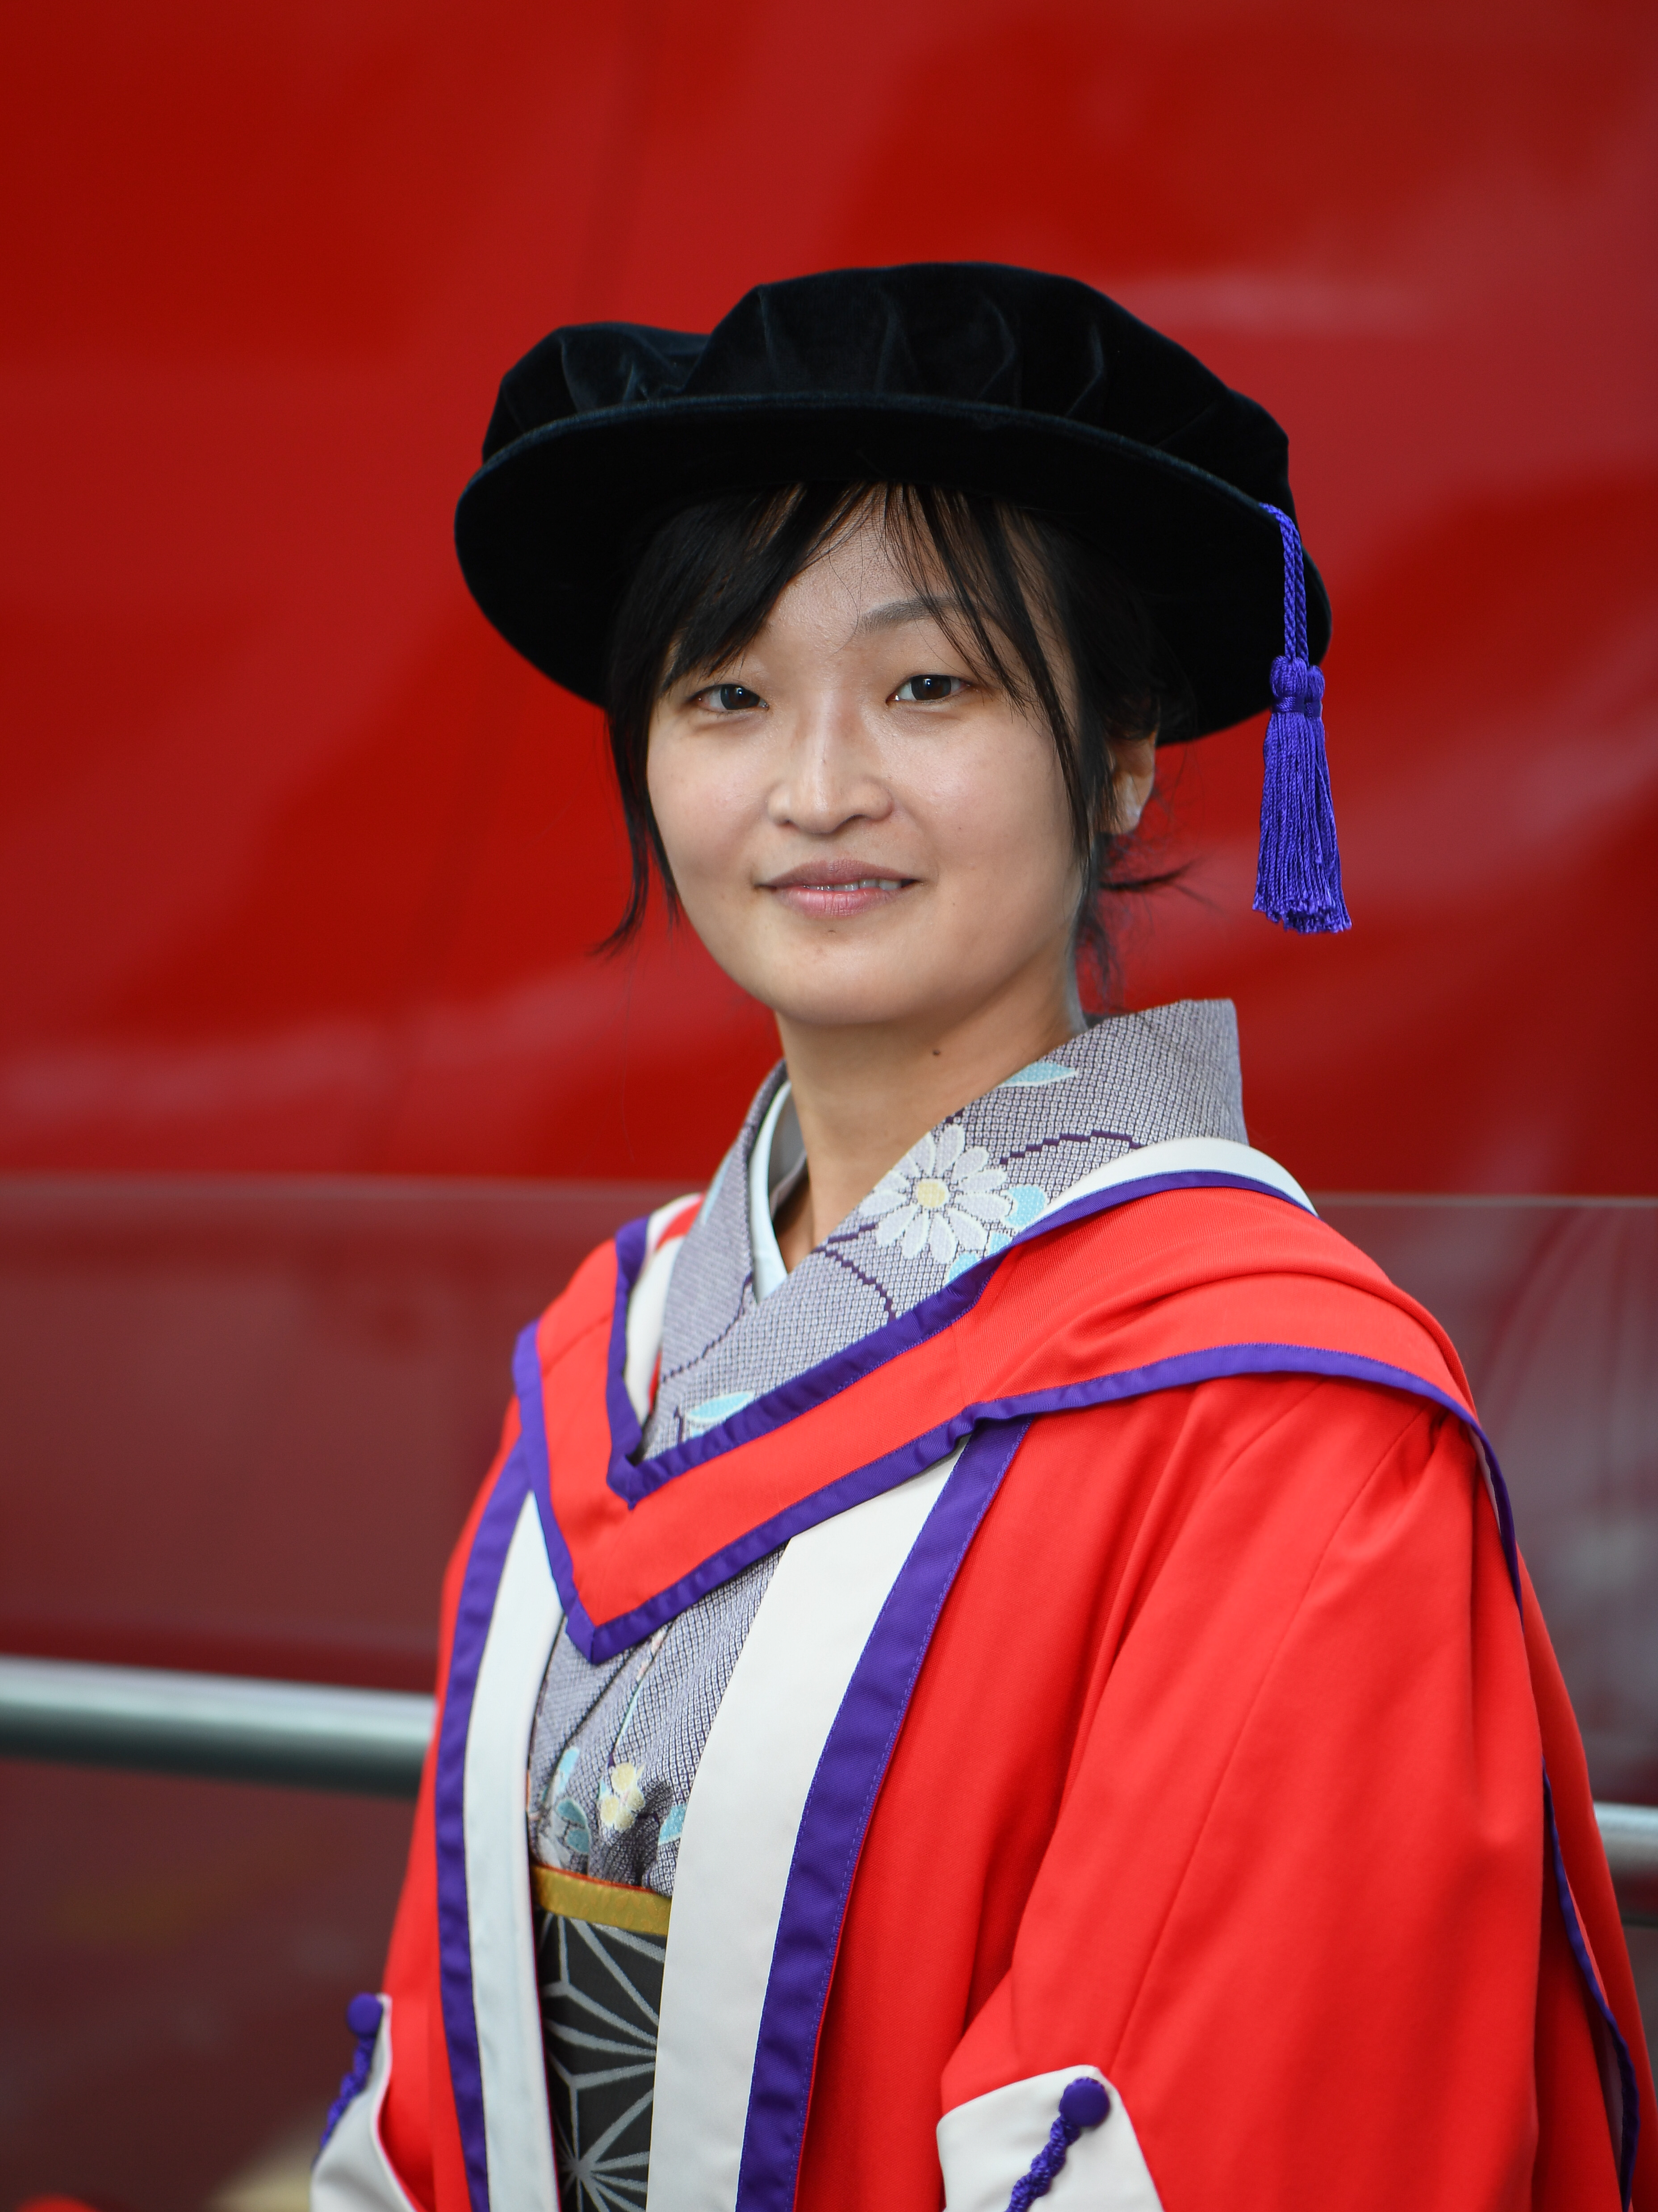 Image of Michiko Nitta in her Honorary Doctorate Gown